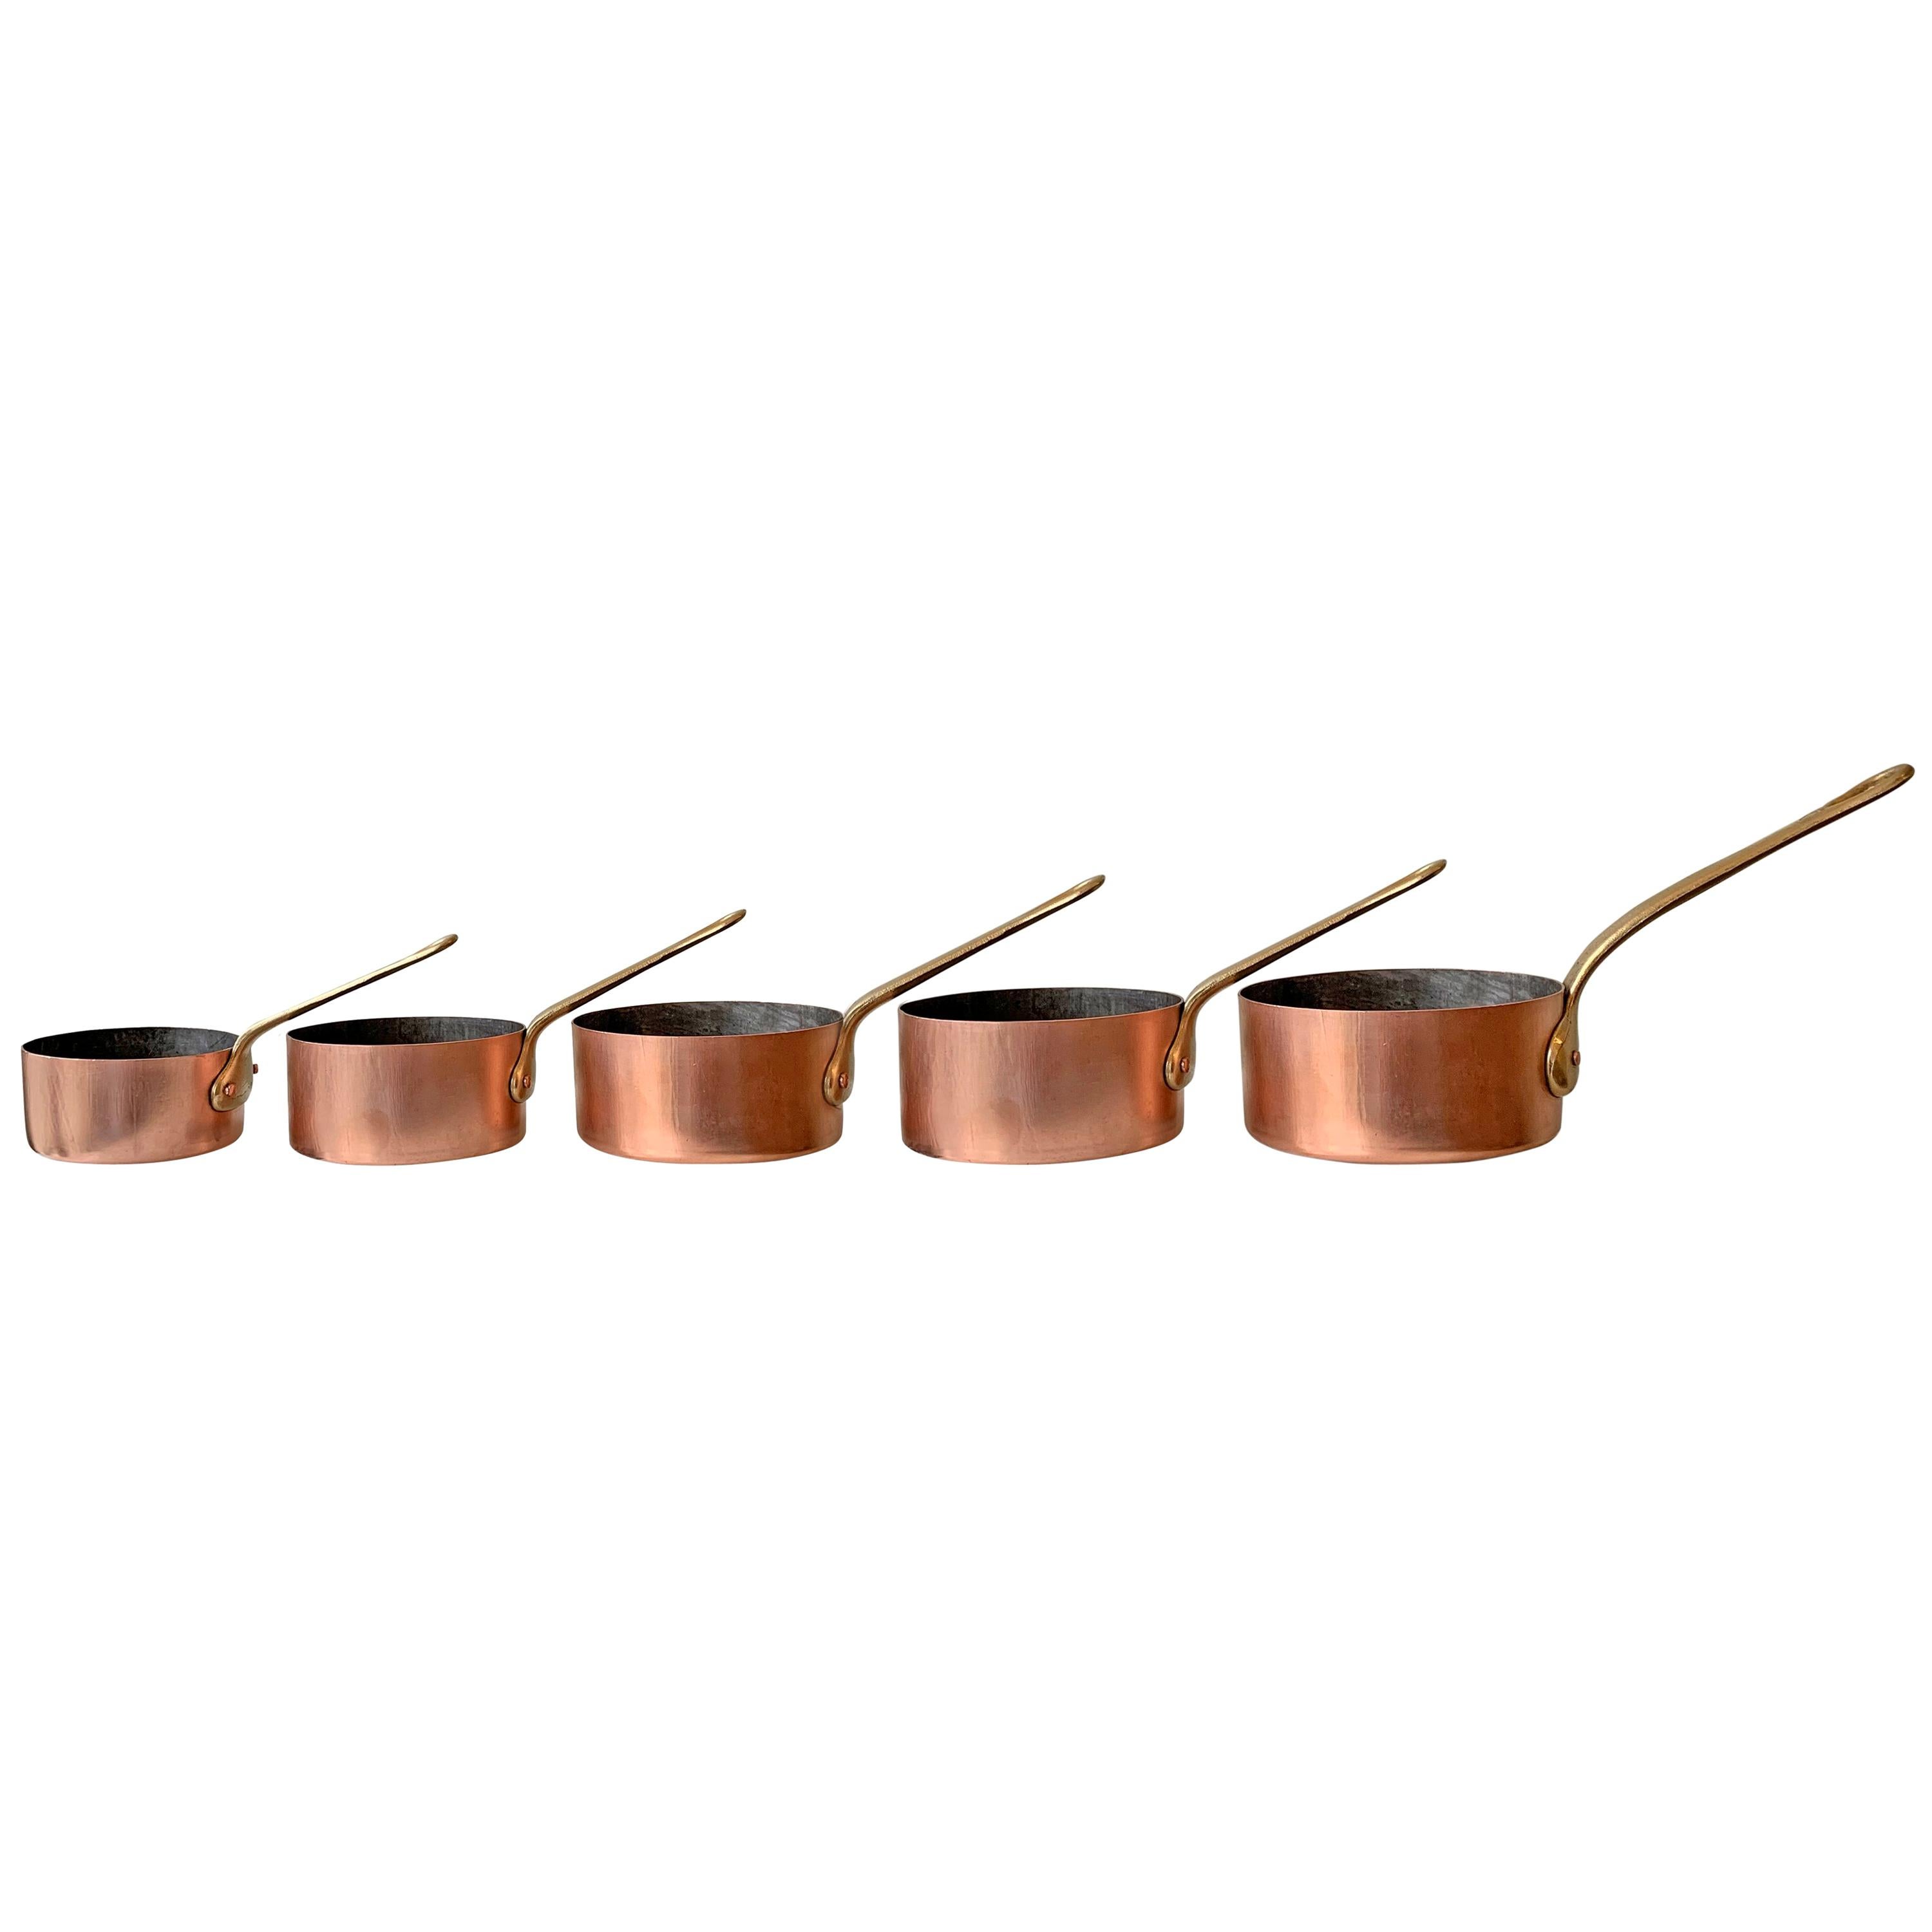 Set of Five French Miniature Copper Saucepans